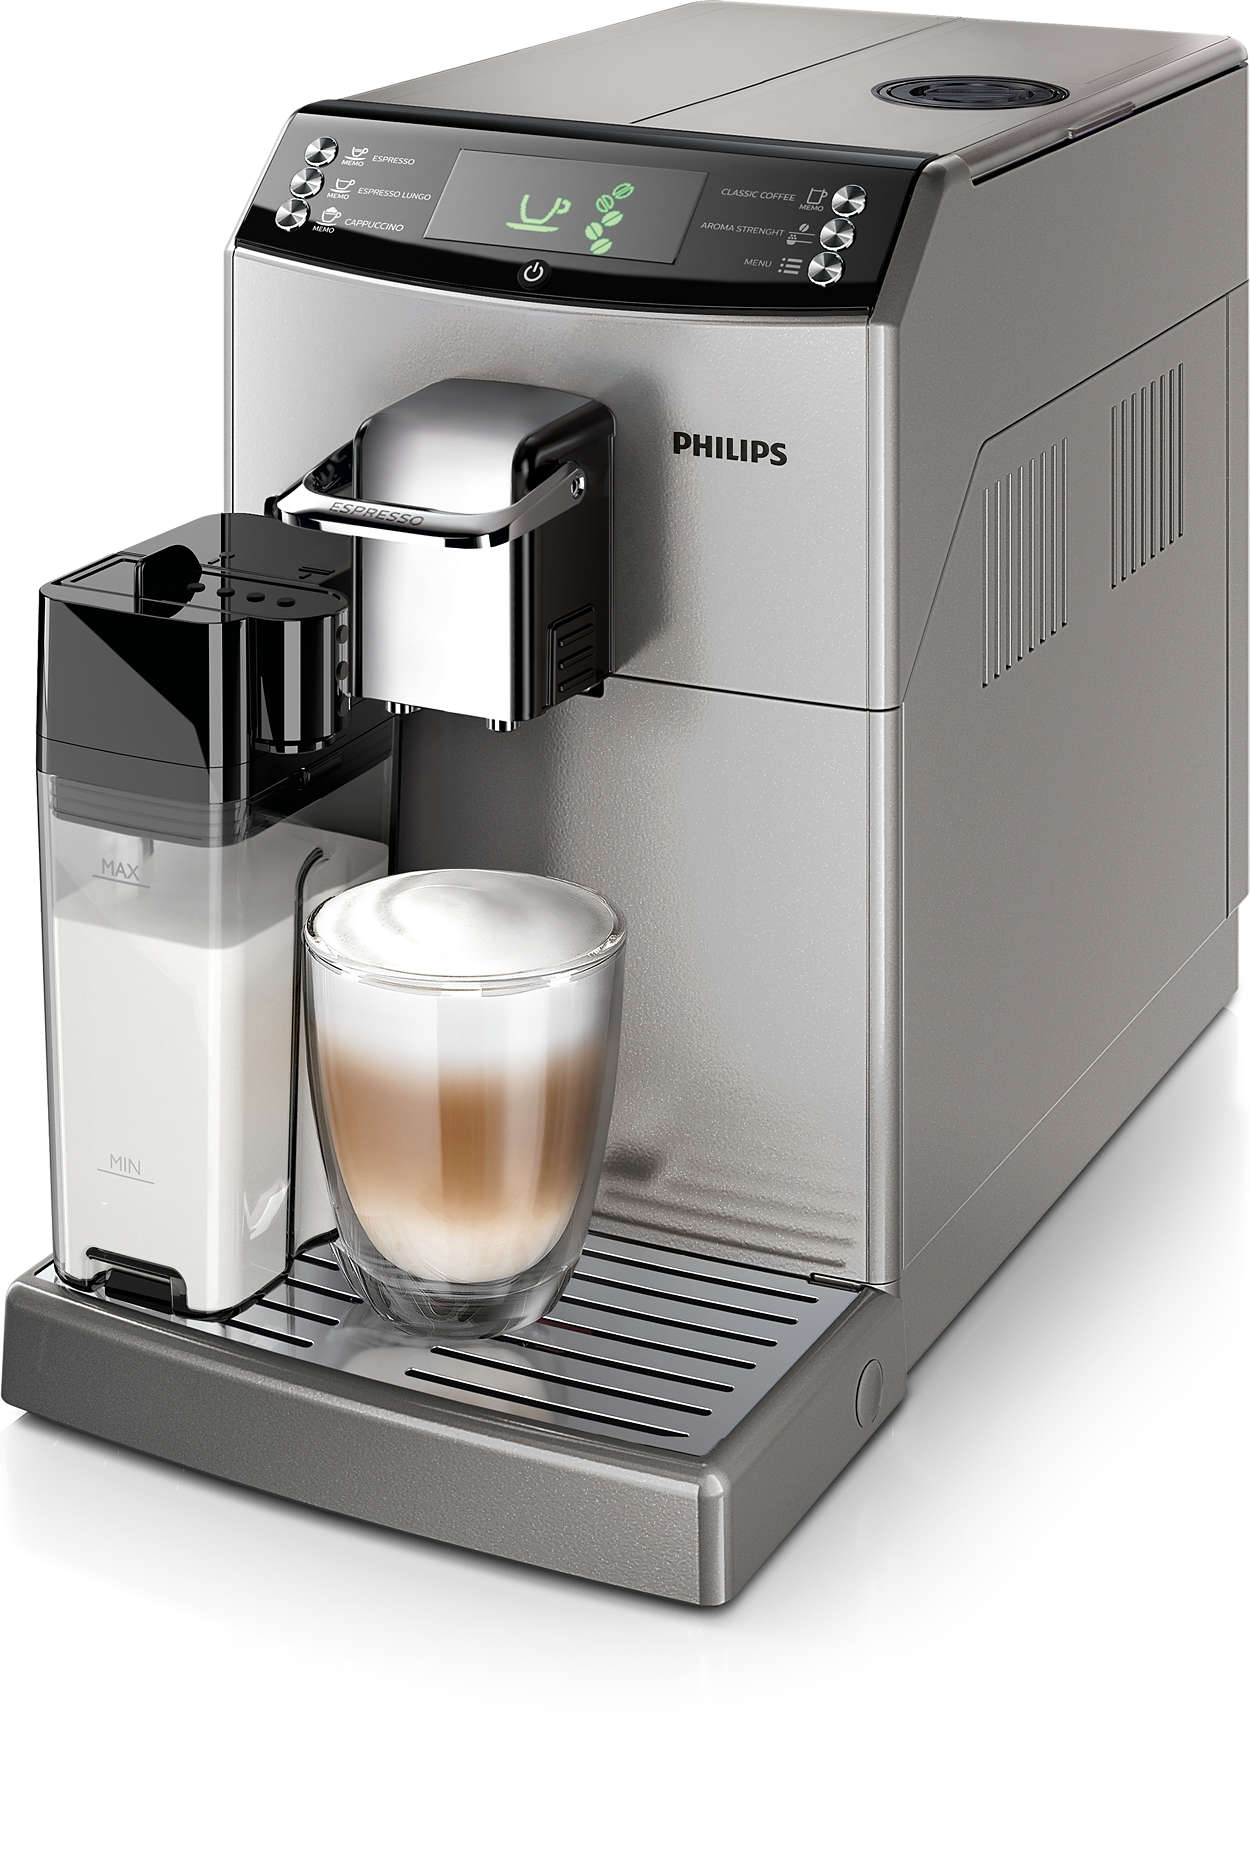 dentist appeal Concession 4000 Series Super-automatic espresso machine HD8847/15 | Philips